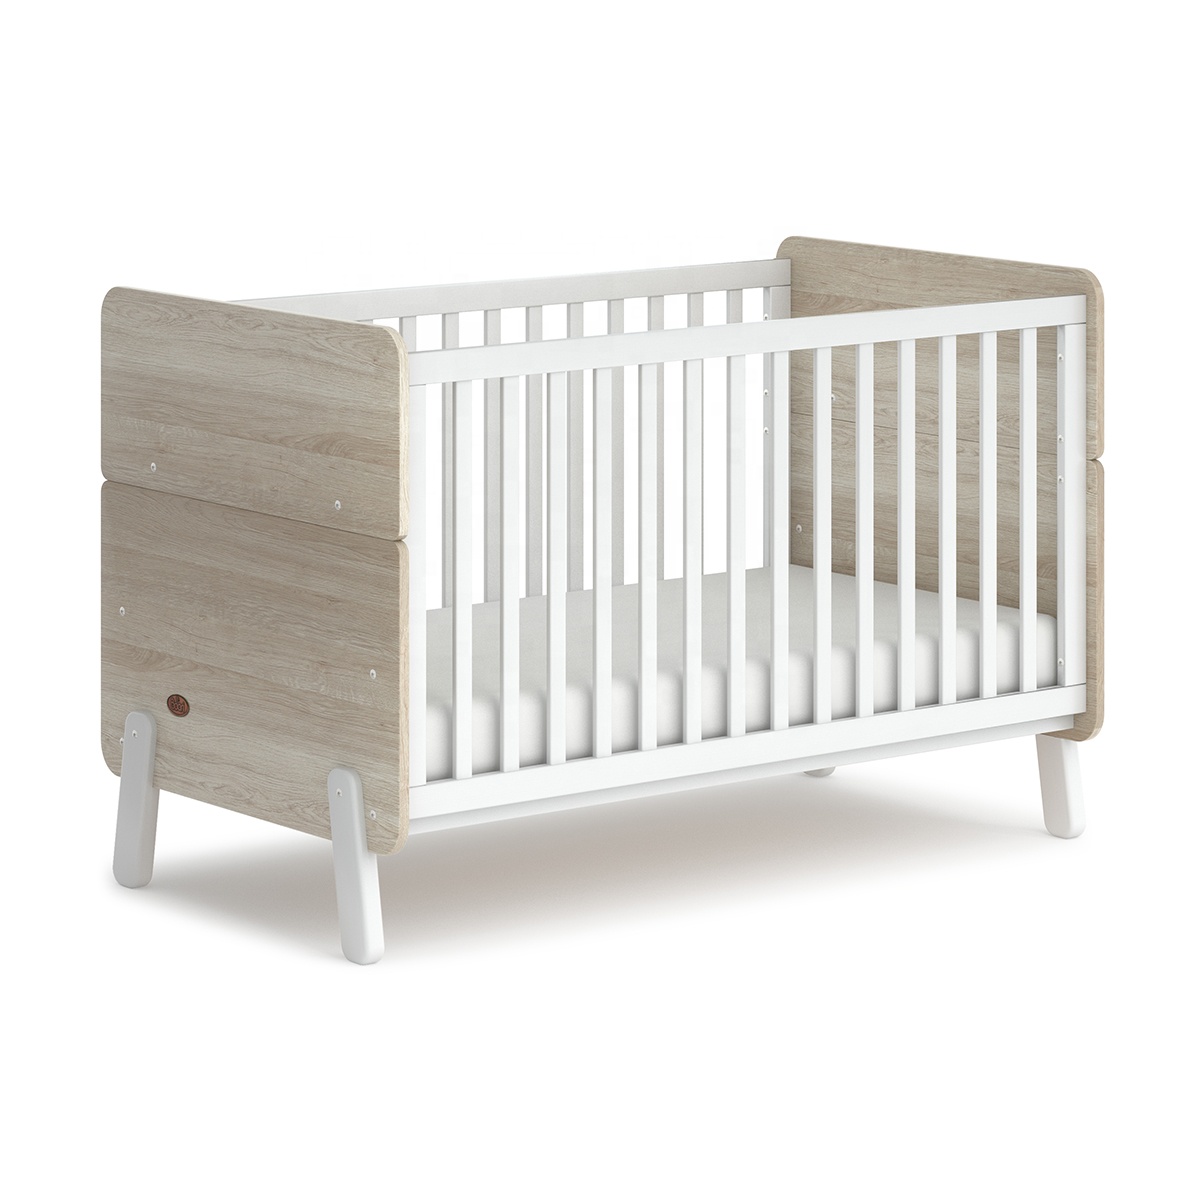 Hot sale multipurpose wooden baby cot (11).jpg